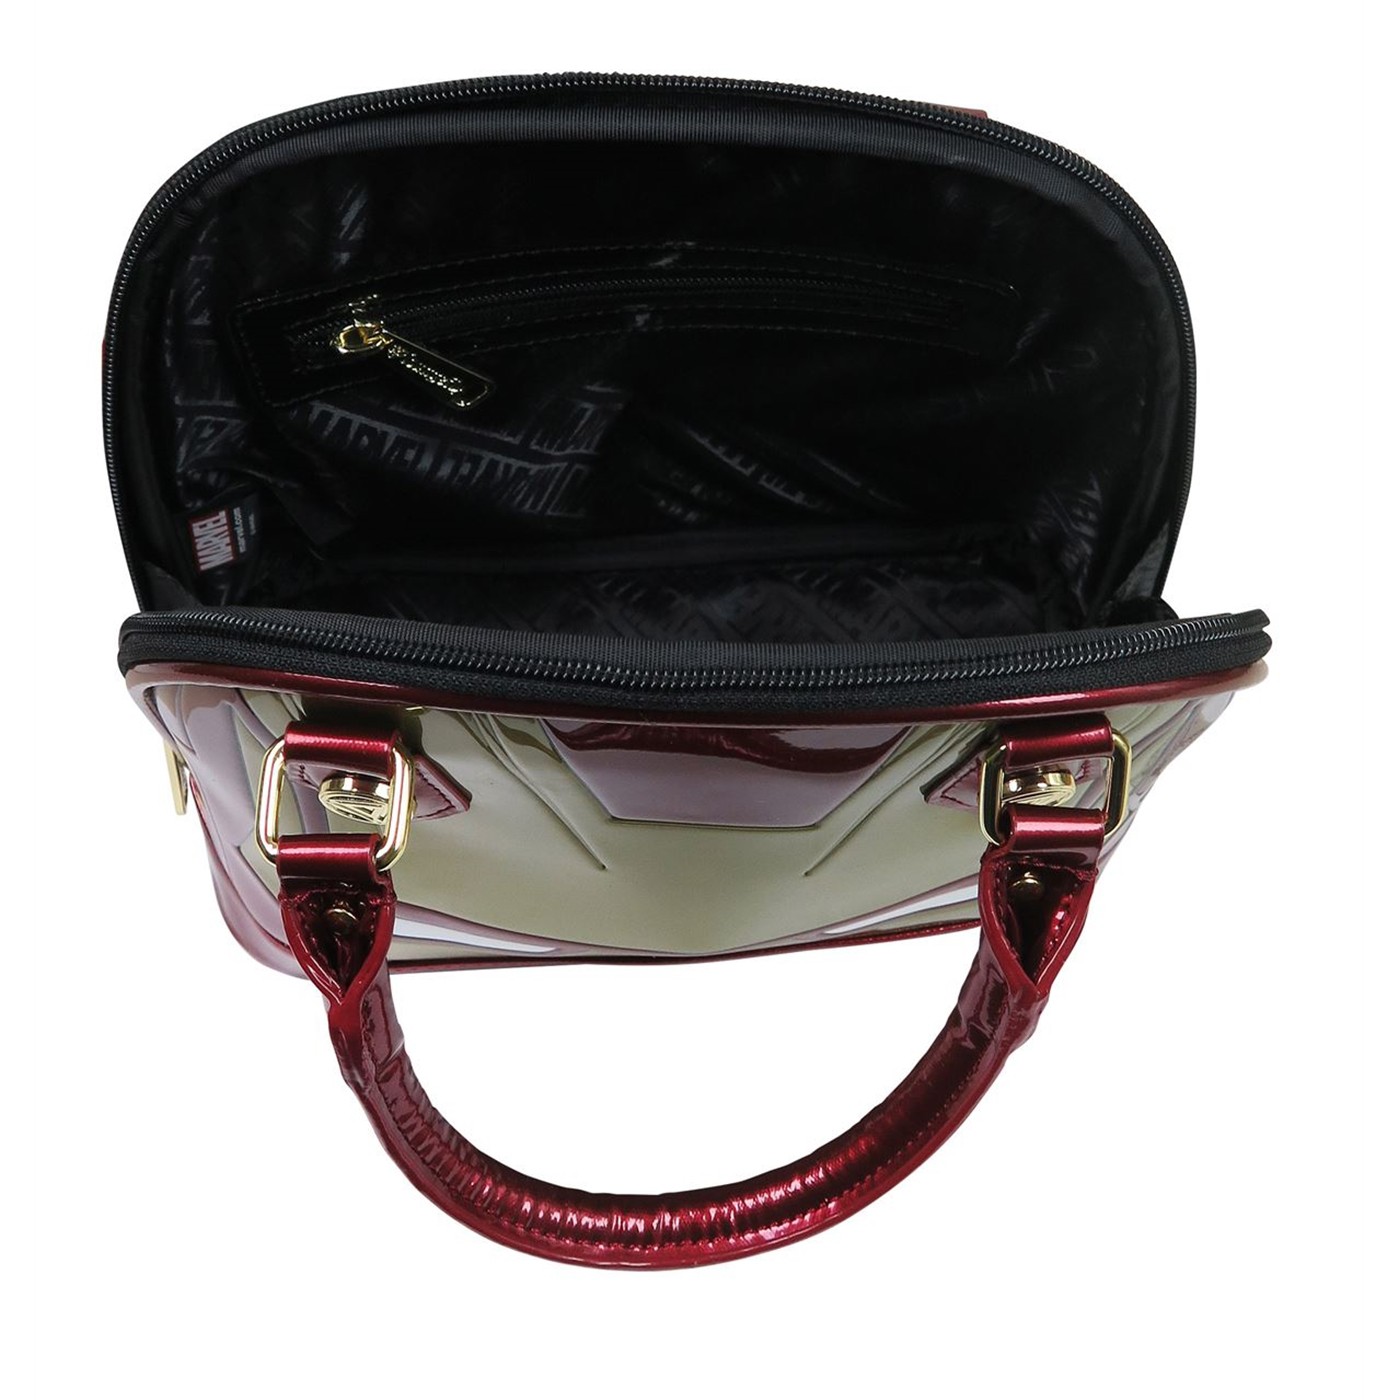 Iron Man Helmet Patent Leather Loungefly Dome Handbag